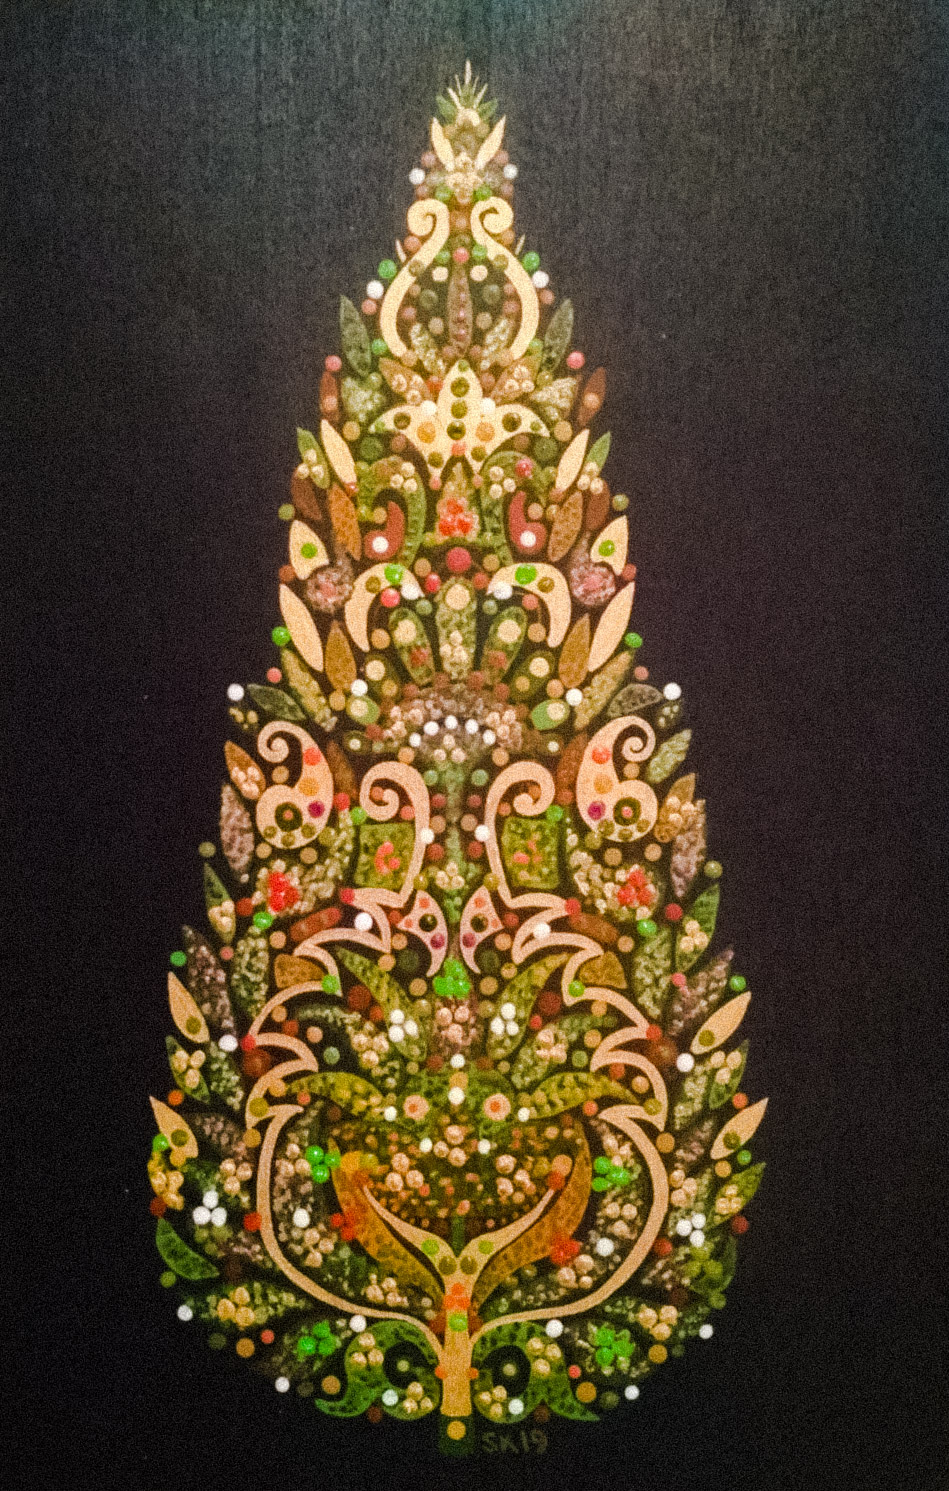 Silvia Karamfilova Art "Festive Cypress Tree"